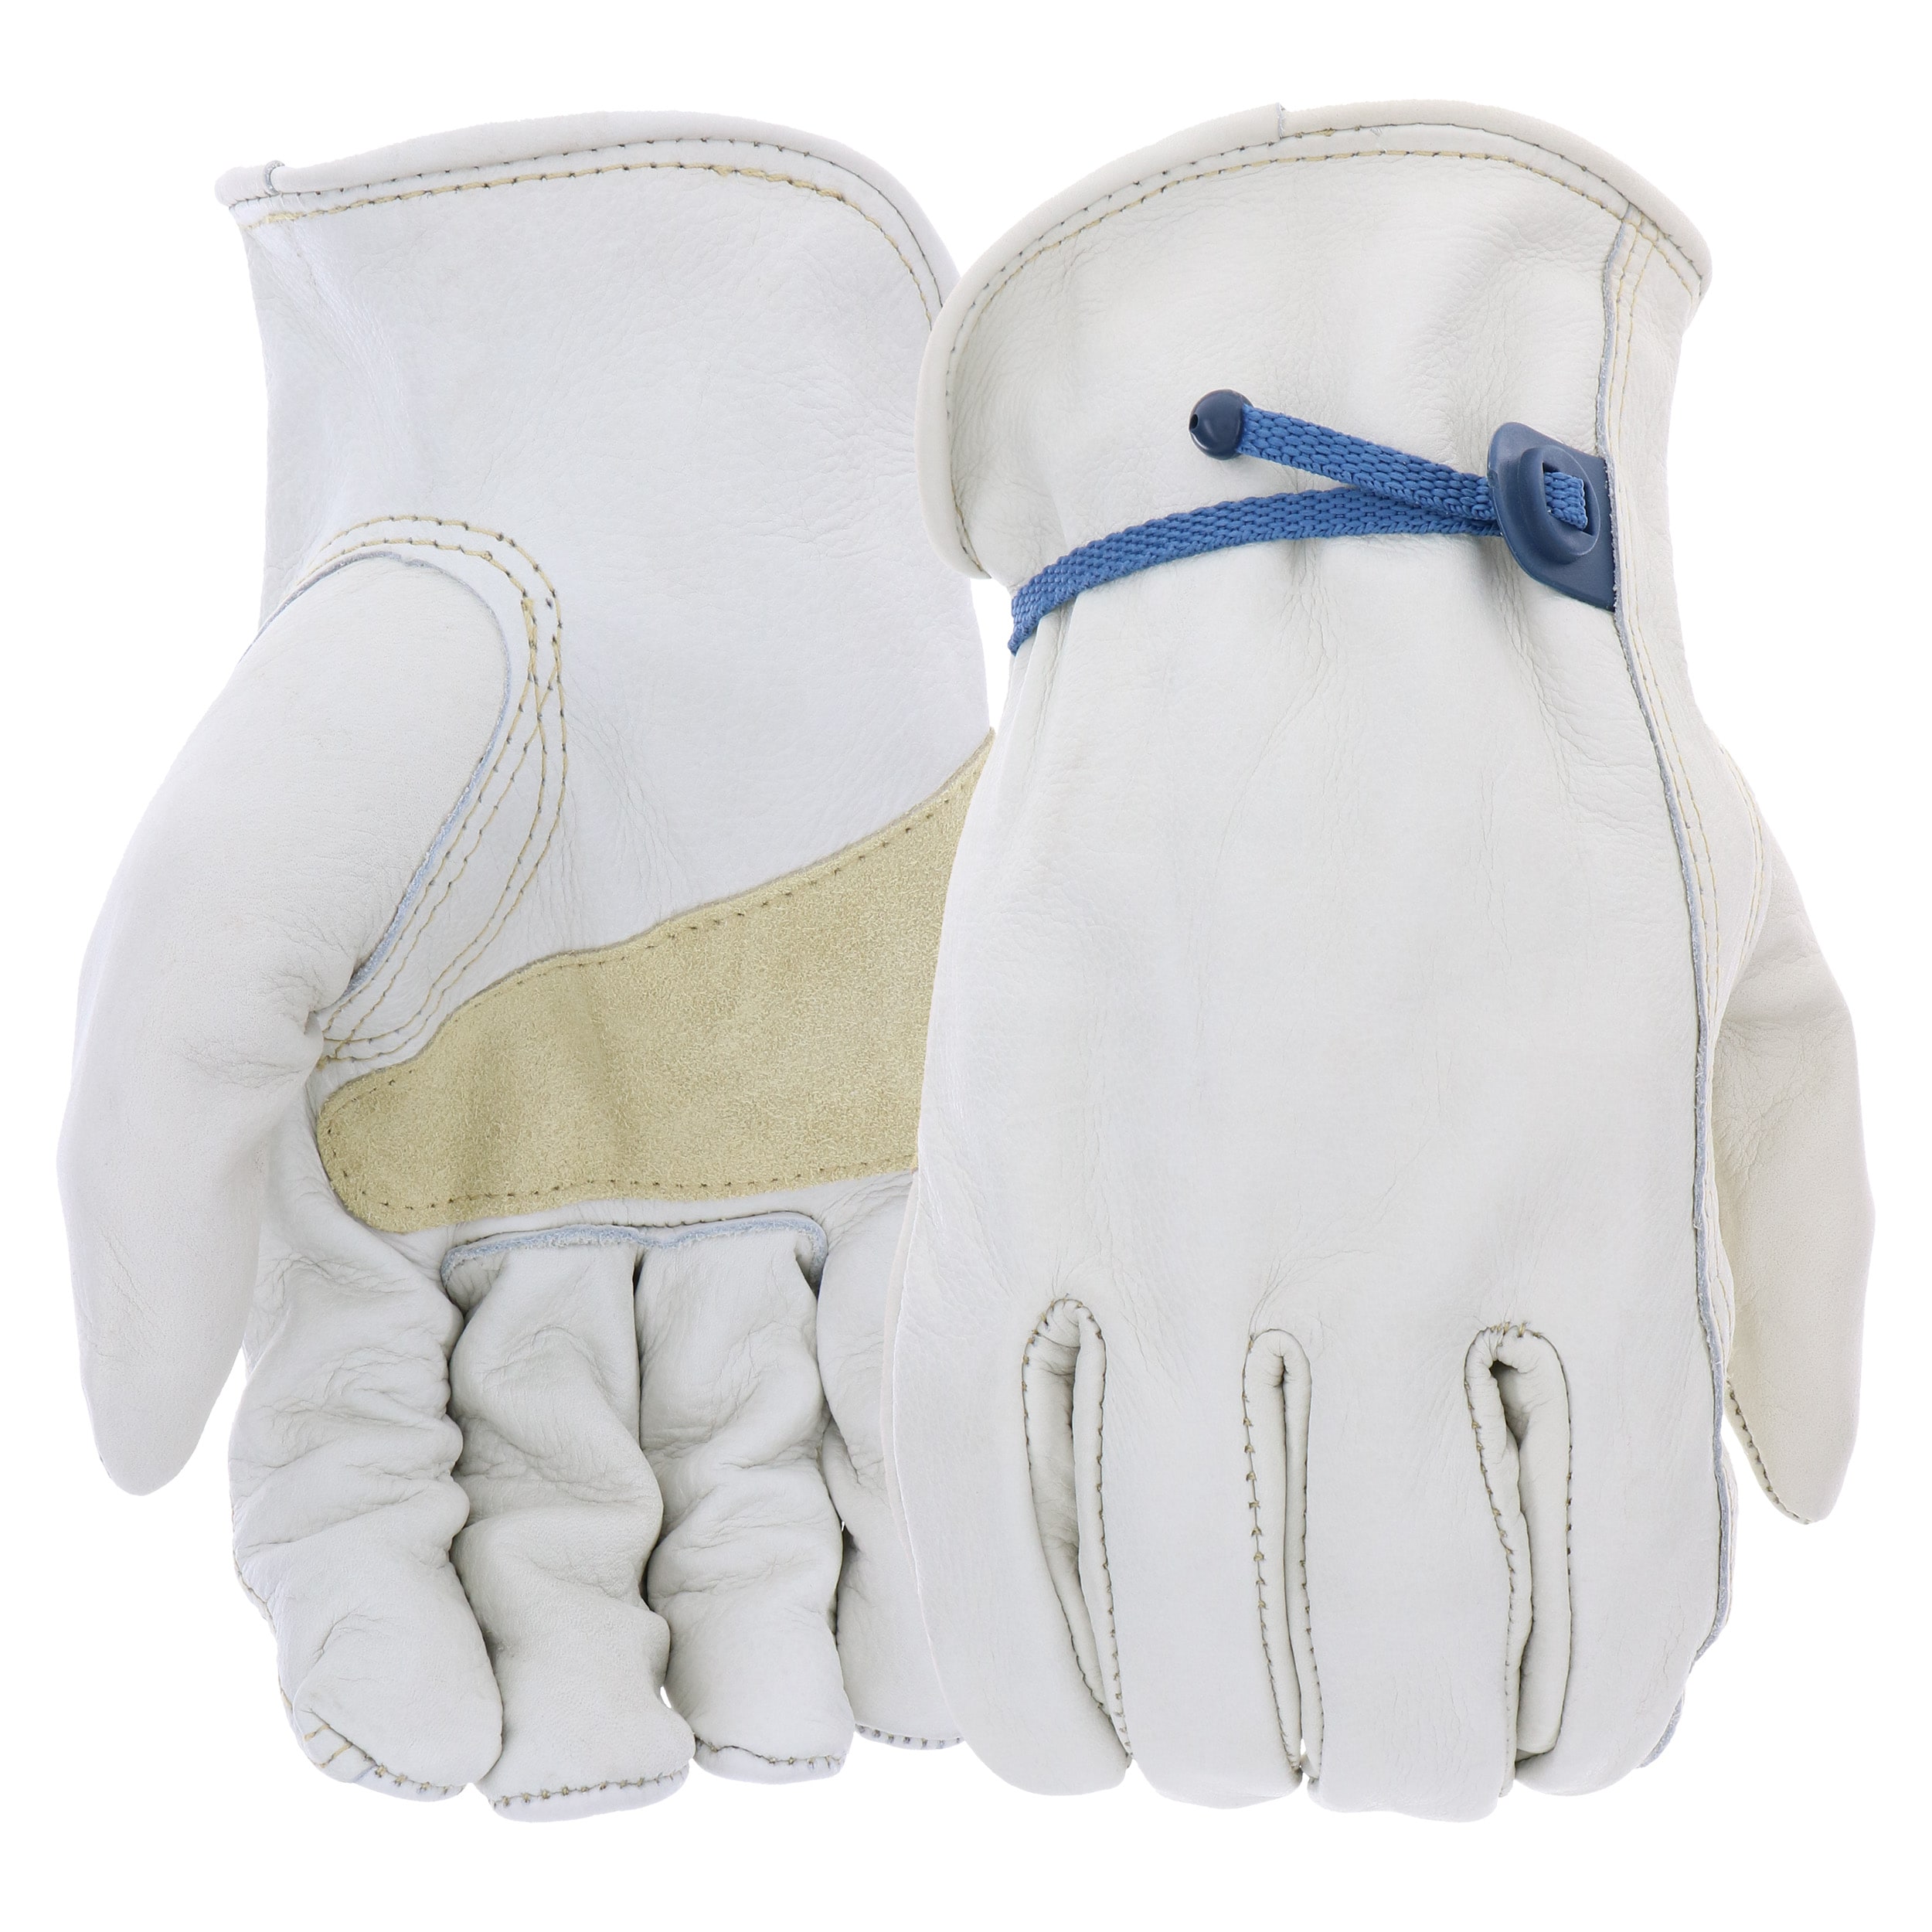 Flex Grip Leather Work Gloves - Tough Cowhide for Men and Women, Medium  (Gold)